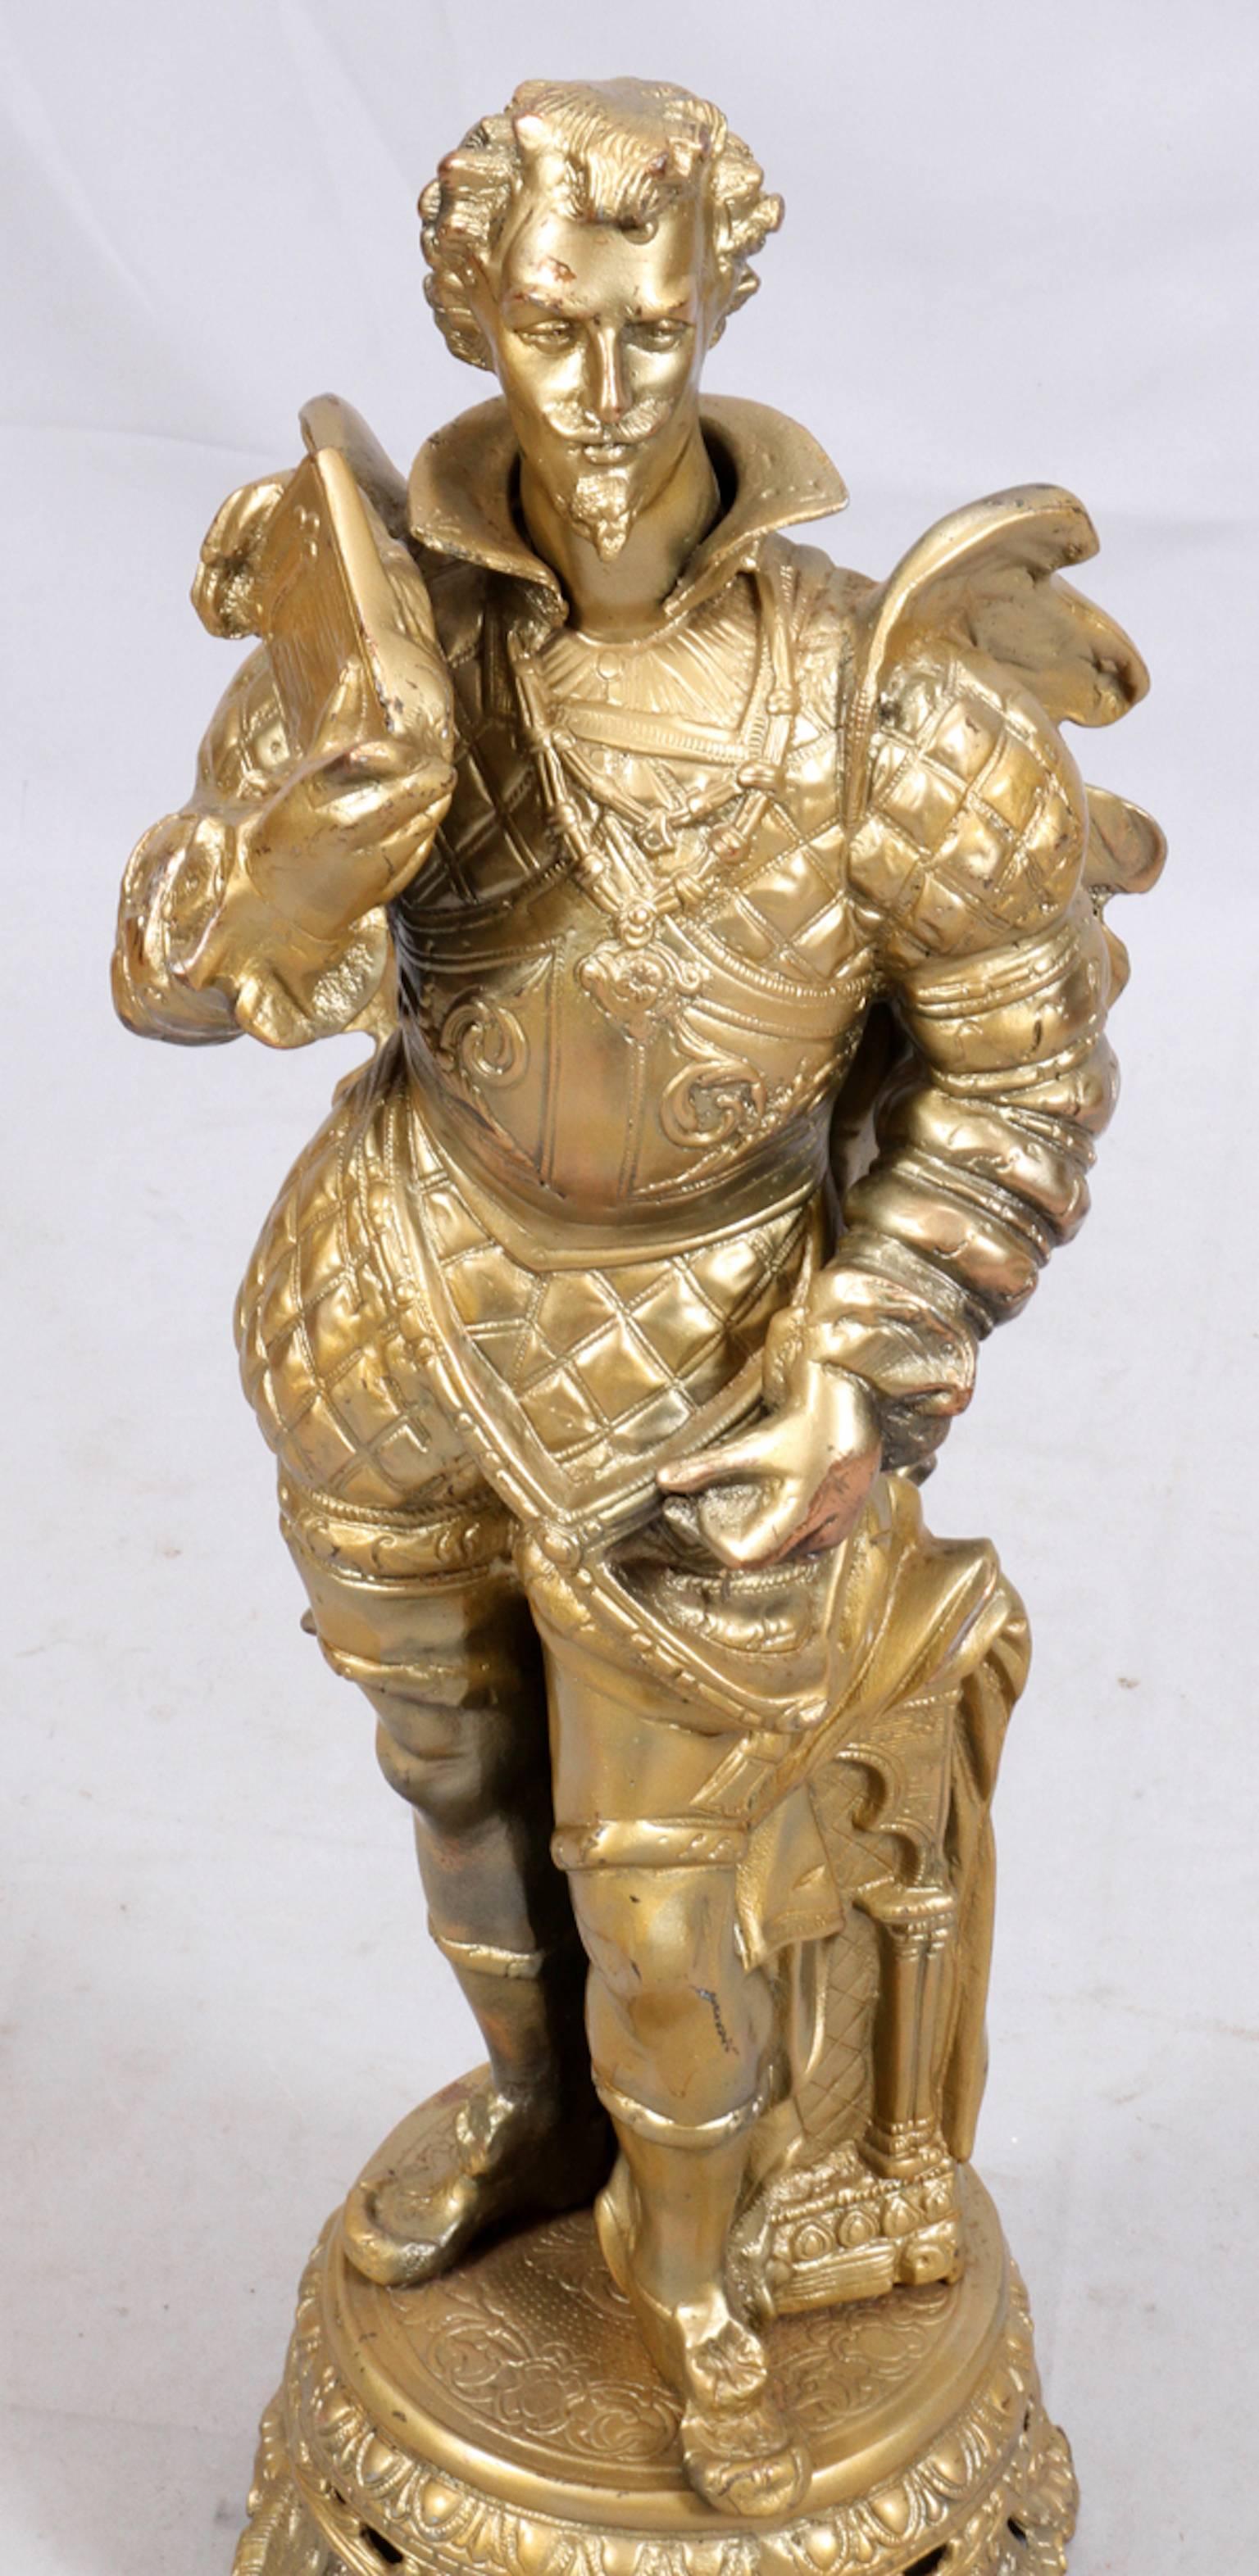 Gilded spelter sculpture, measure: H 34", Sir Walter Raleigh: An unmarked gilded spelter sculpture.